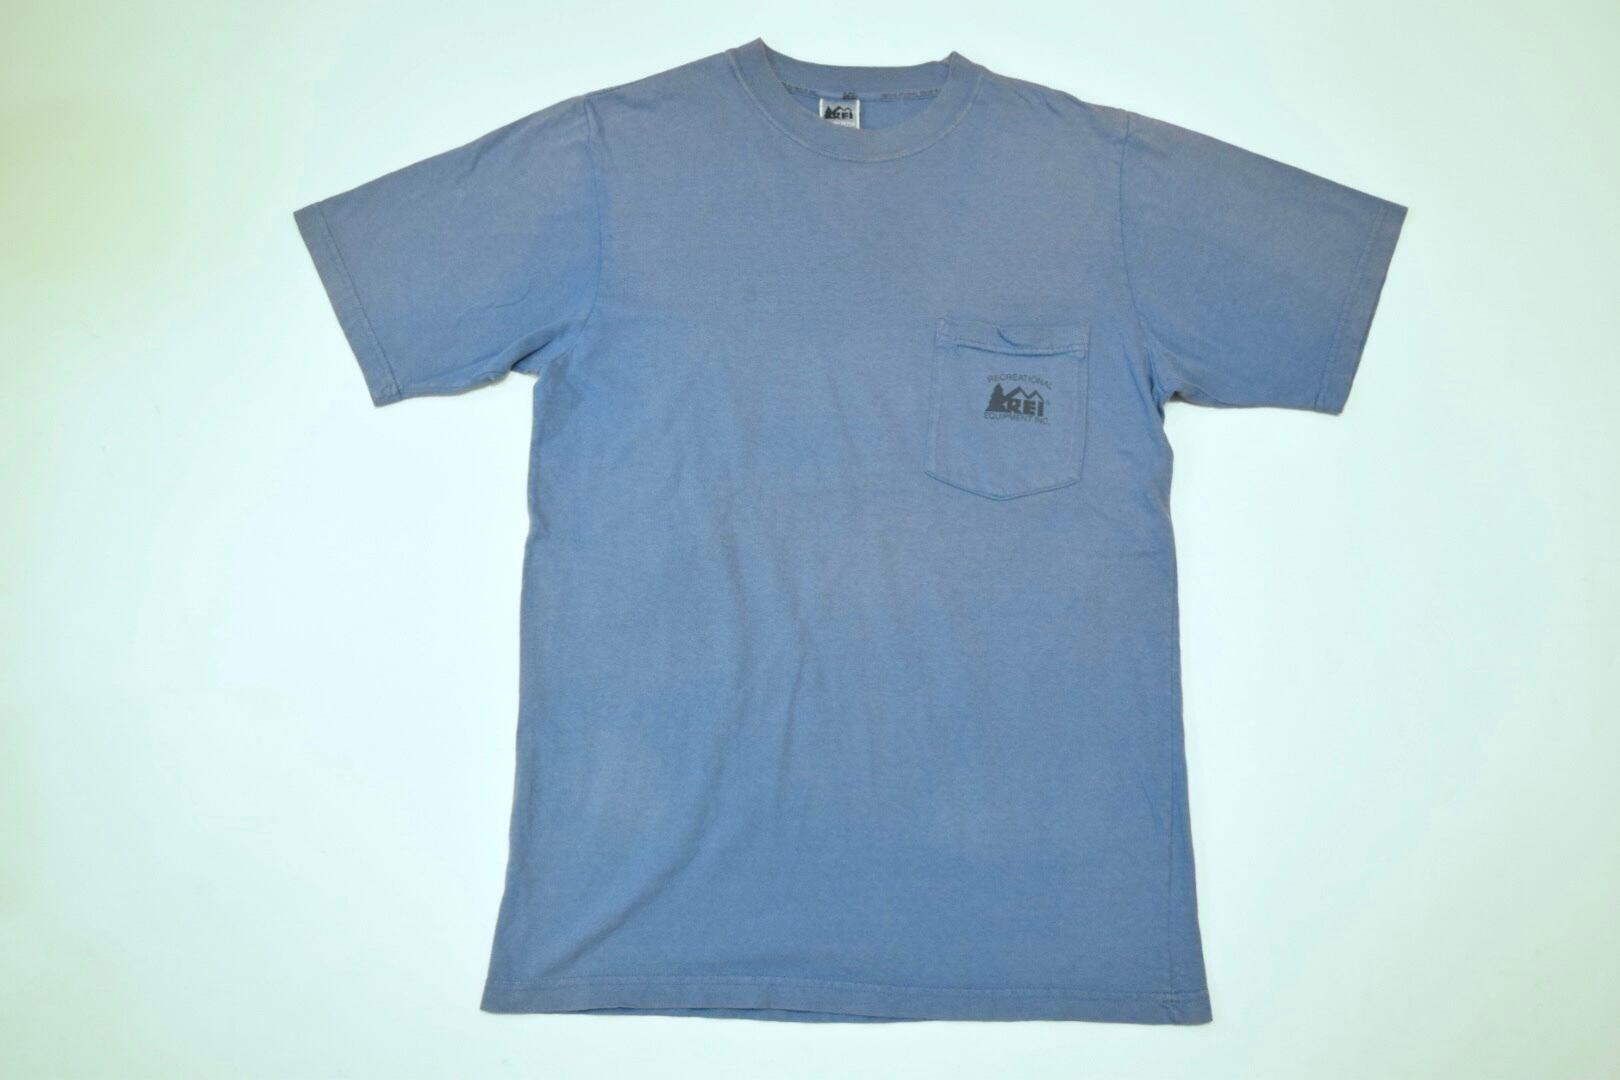 USED 90s REI Pocket T-shirt -Smal 01631